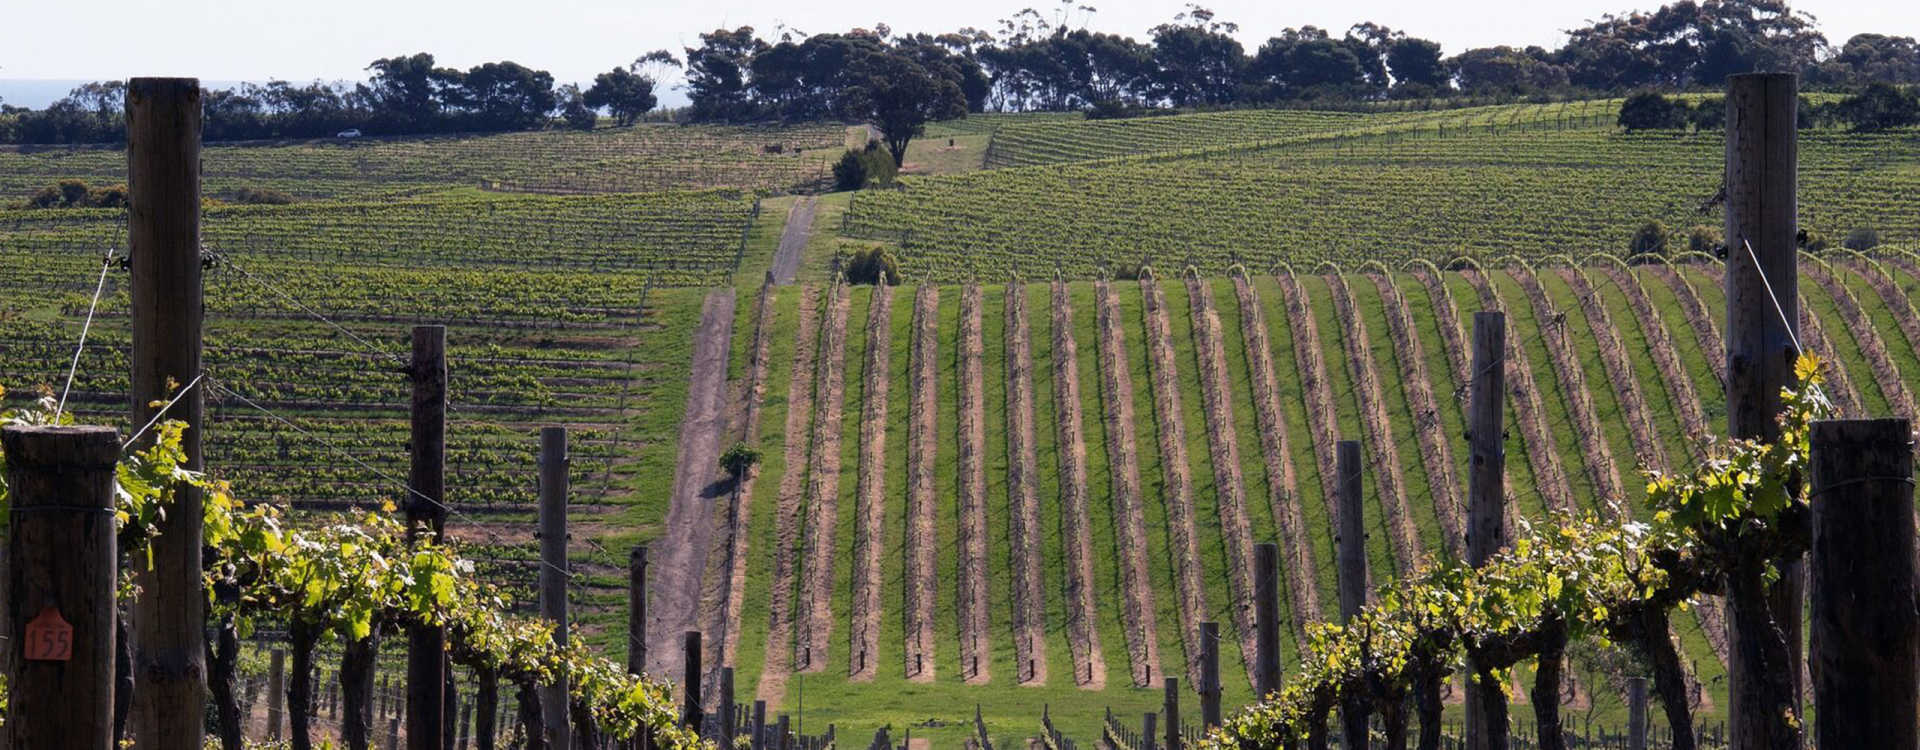 Image for Eden Valley Wine Barossa, Australia content section